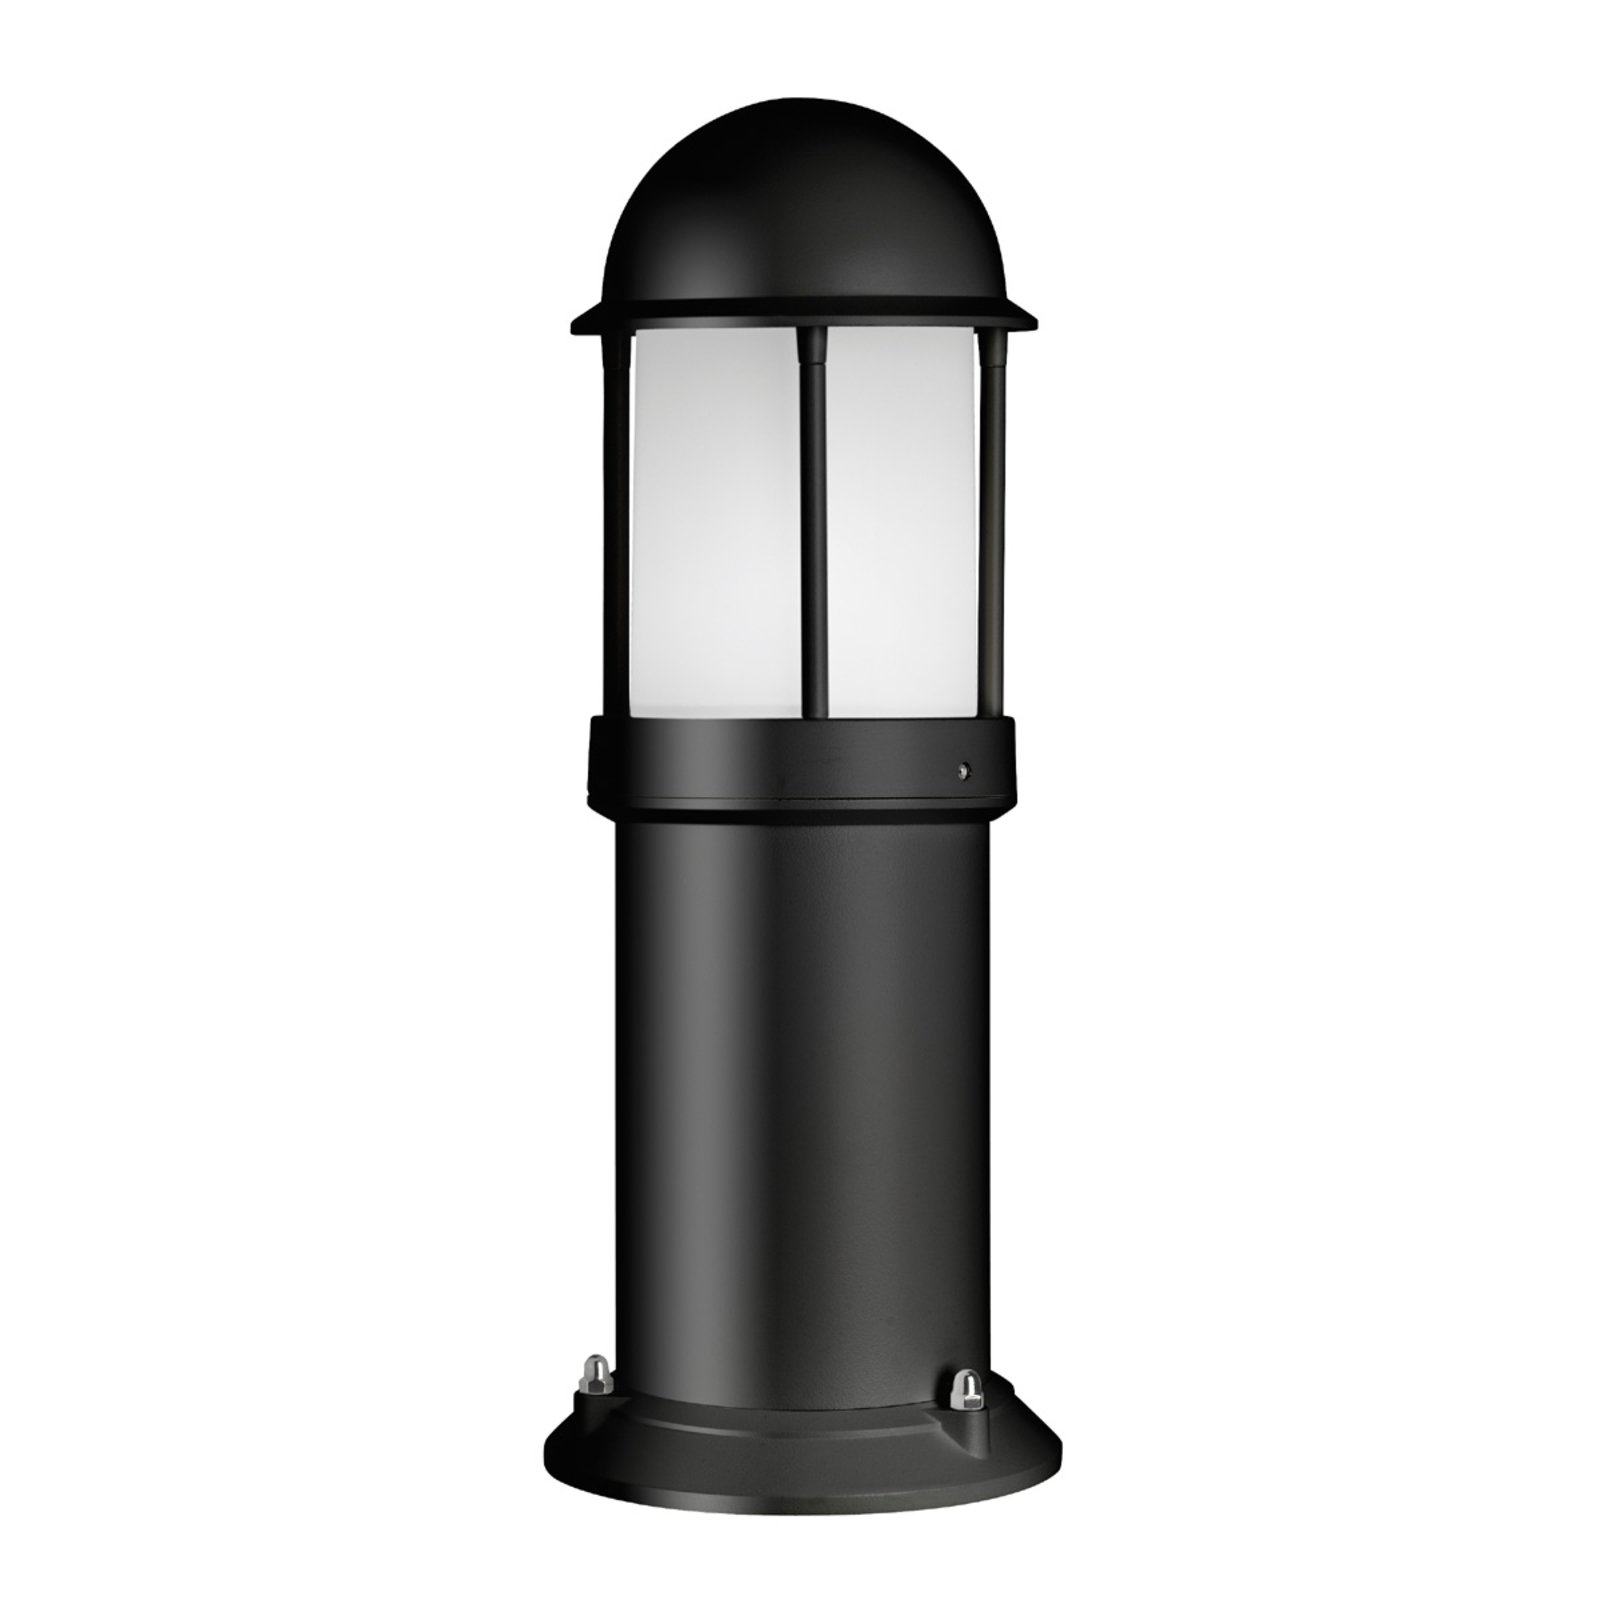 Marco pillar light made of aluminium, black